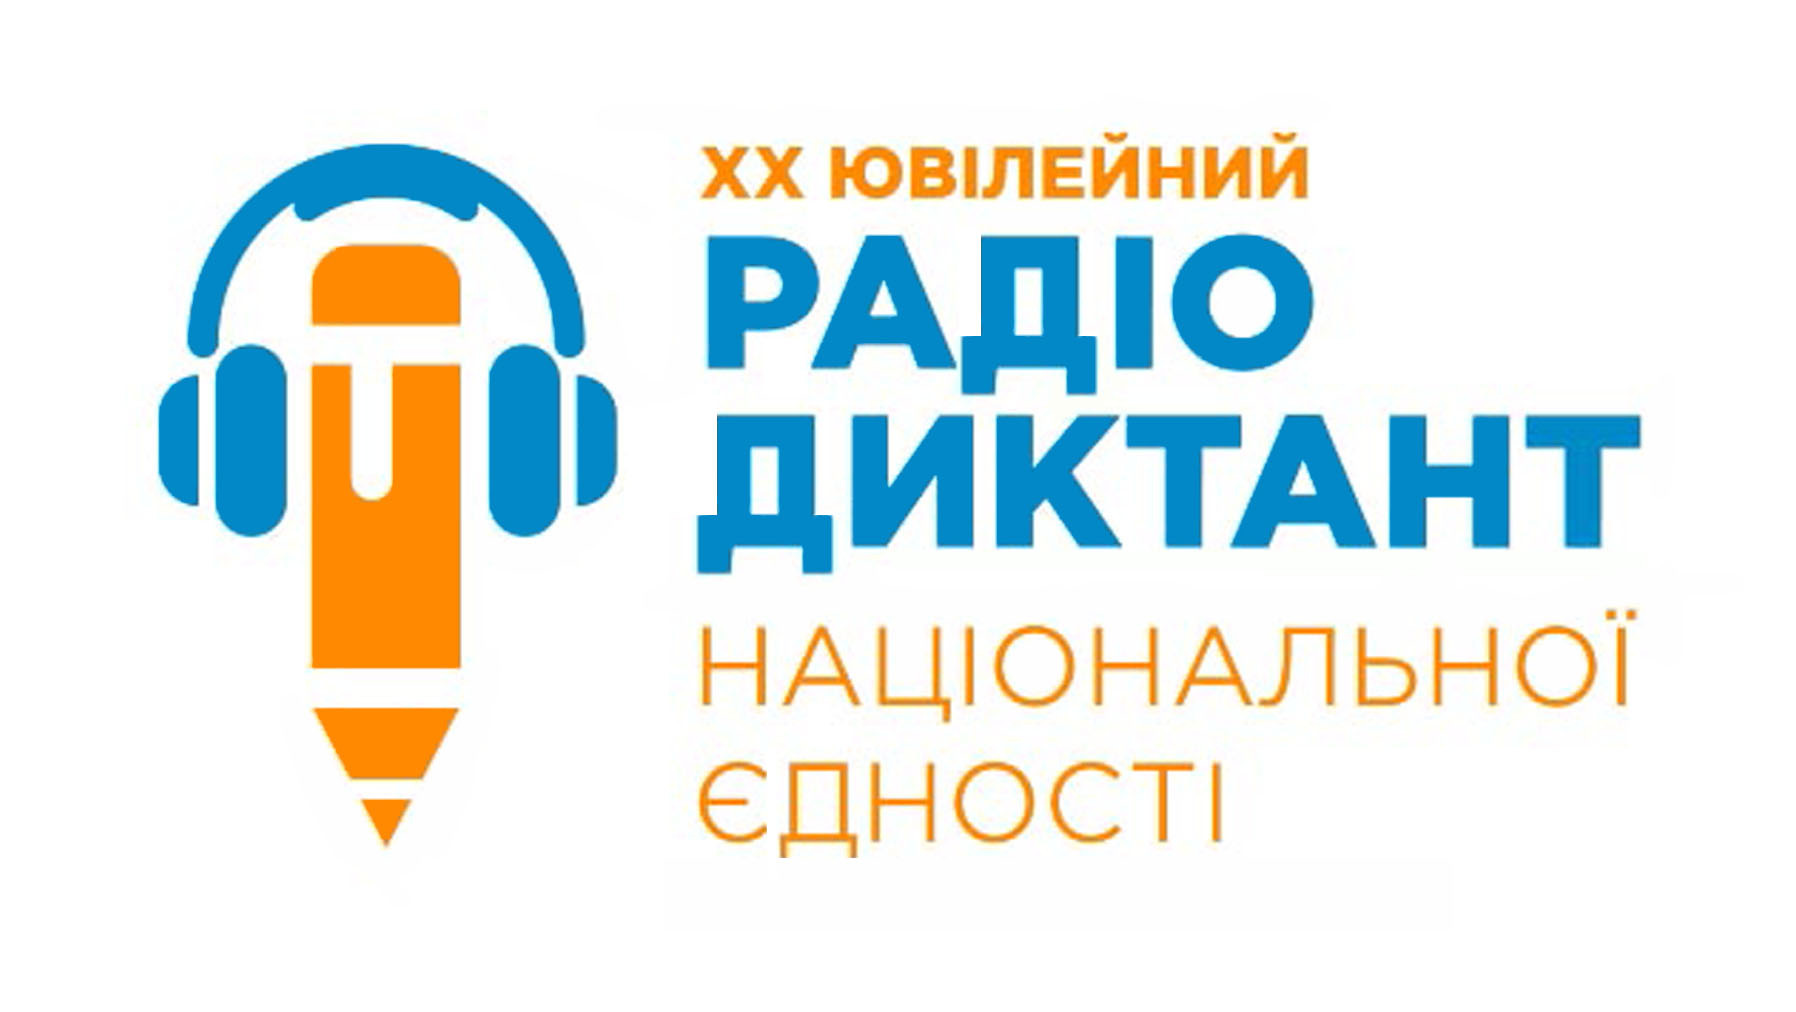 ukrainian radio dictation